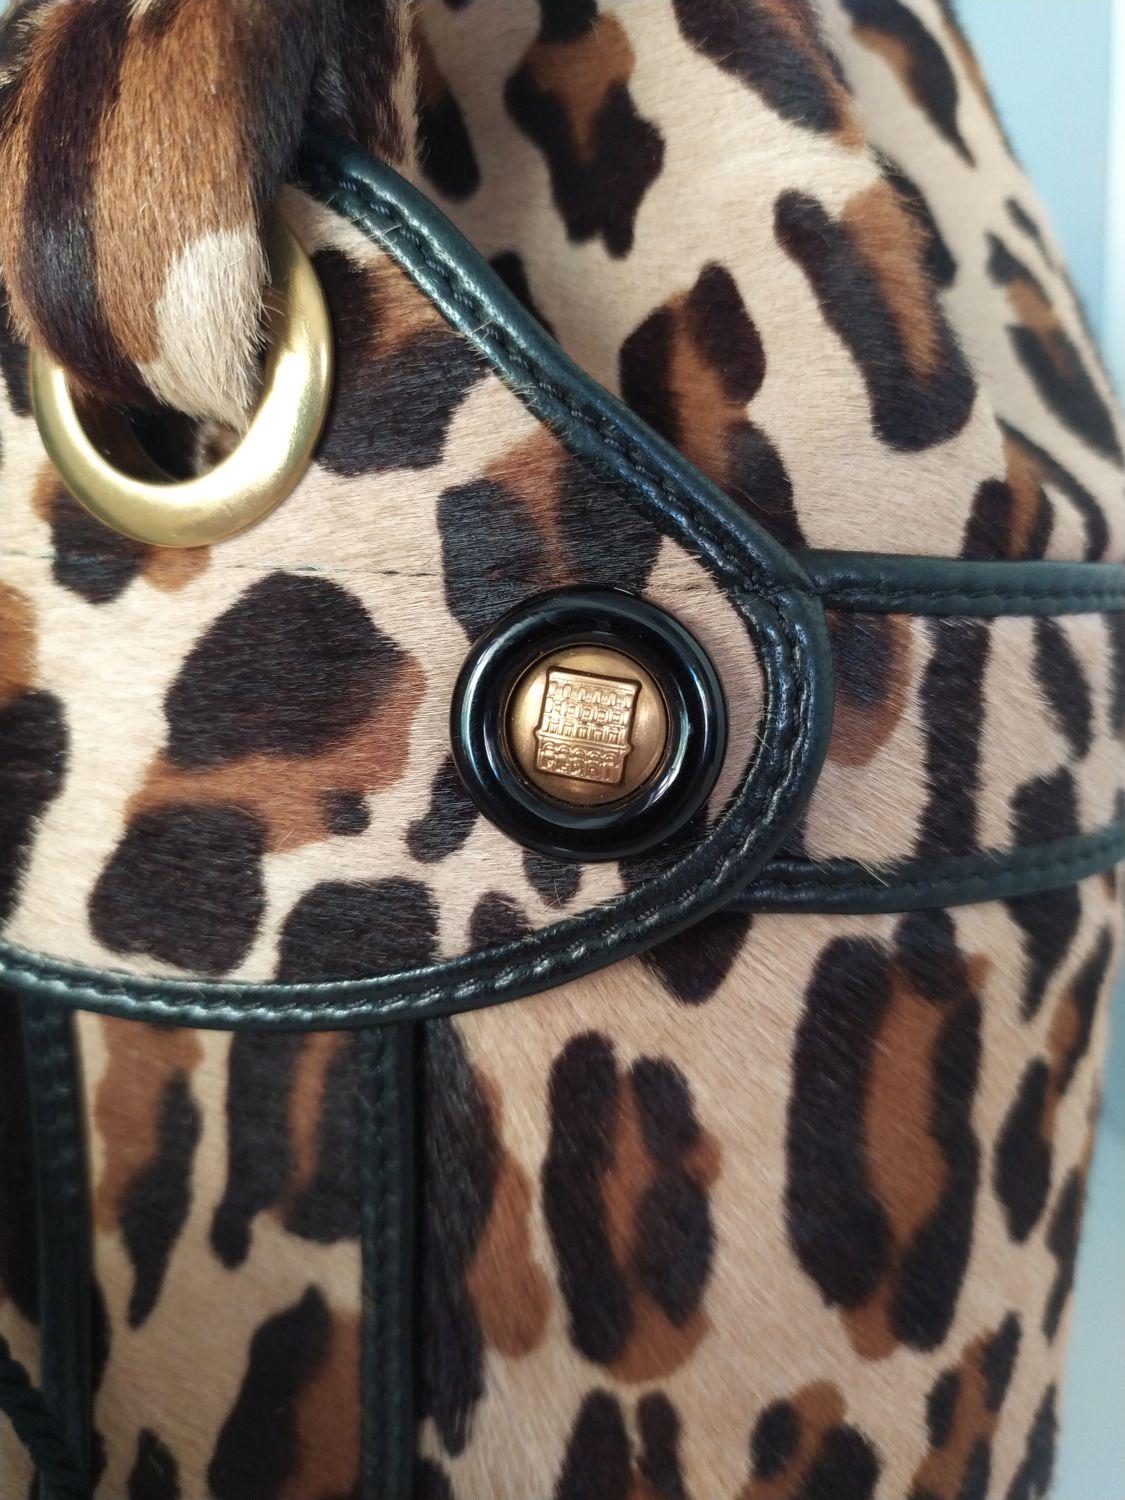 Fendi Animalier Handbag In Excellent Condition For Sale In Gazzaniga (BG), IT